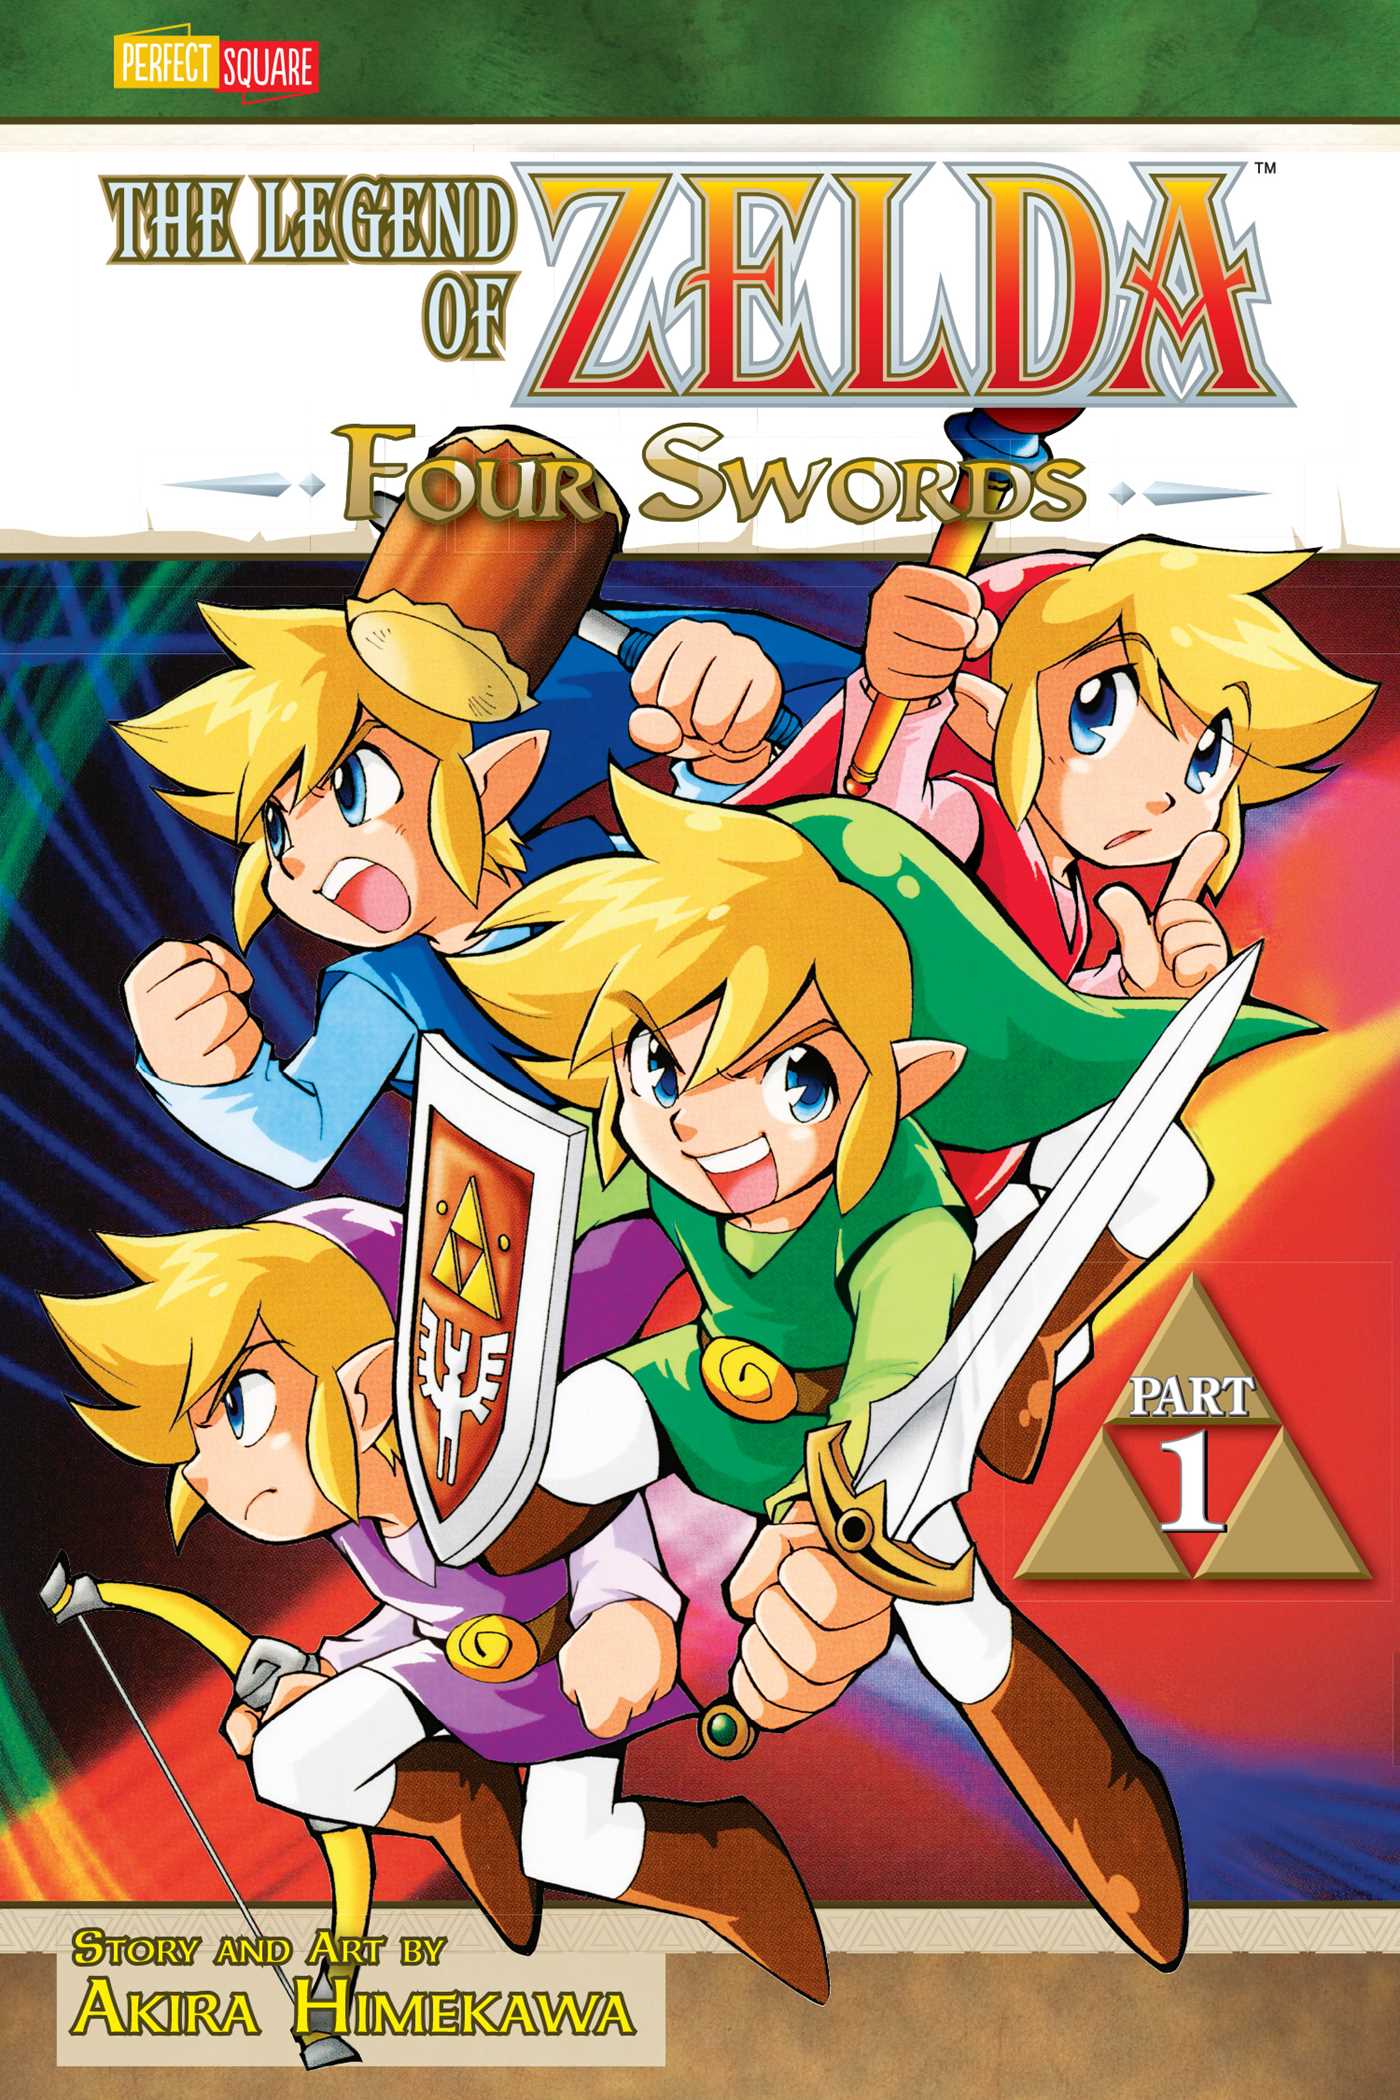 The Legend of Zelda, Vol. 6 | Book by Akira Himekawa | Official ...